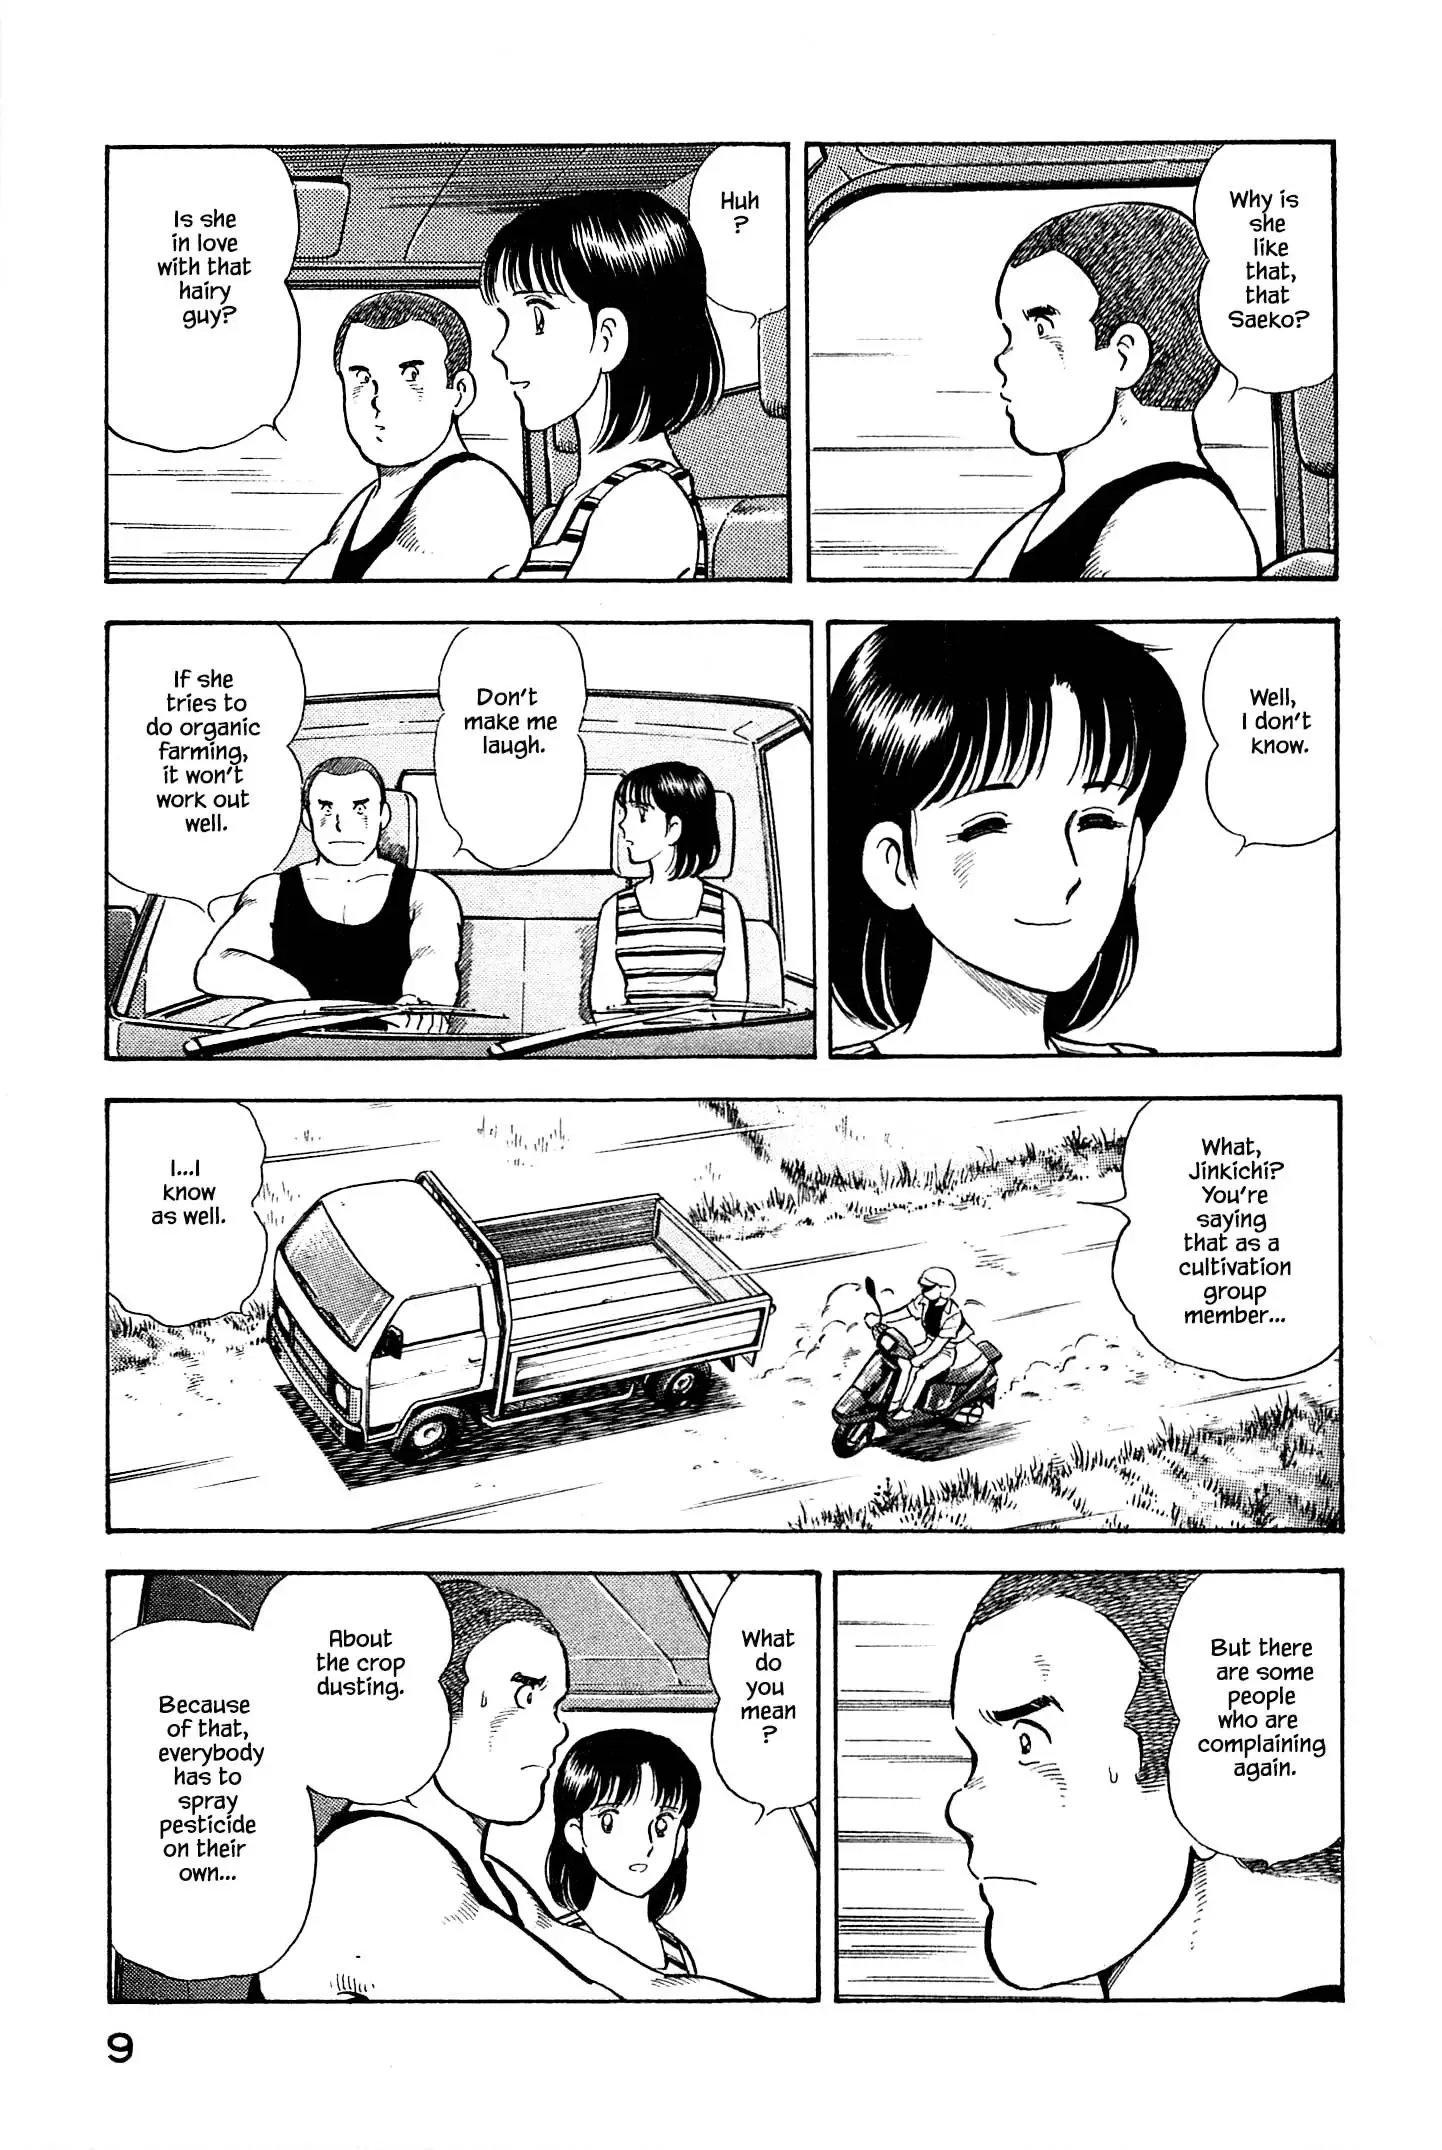 Natsuko's Sake - 88 page 12-1808598c